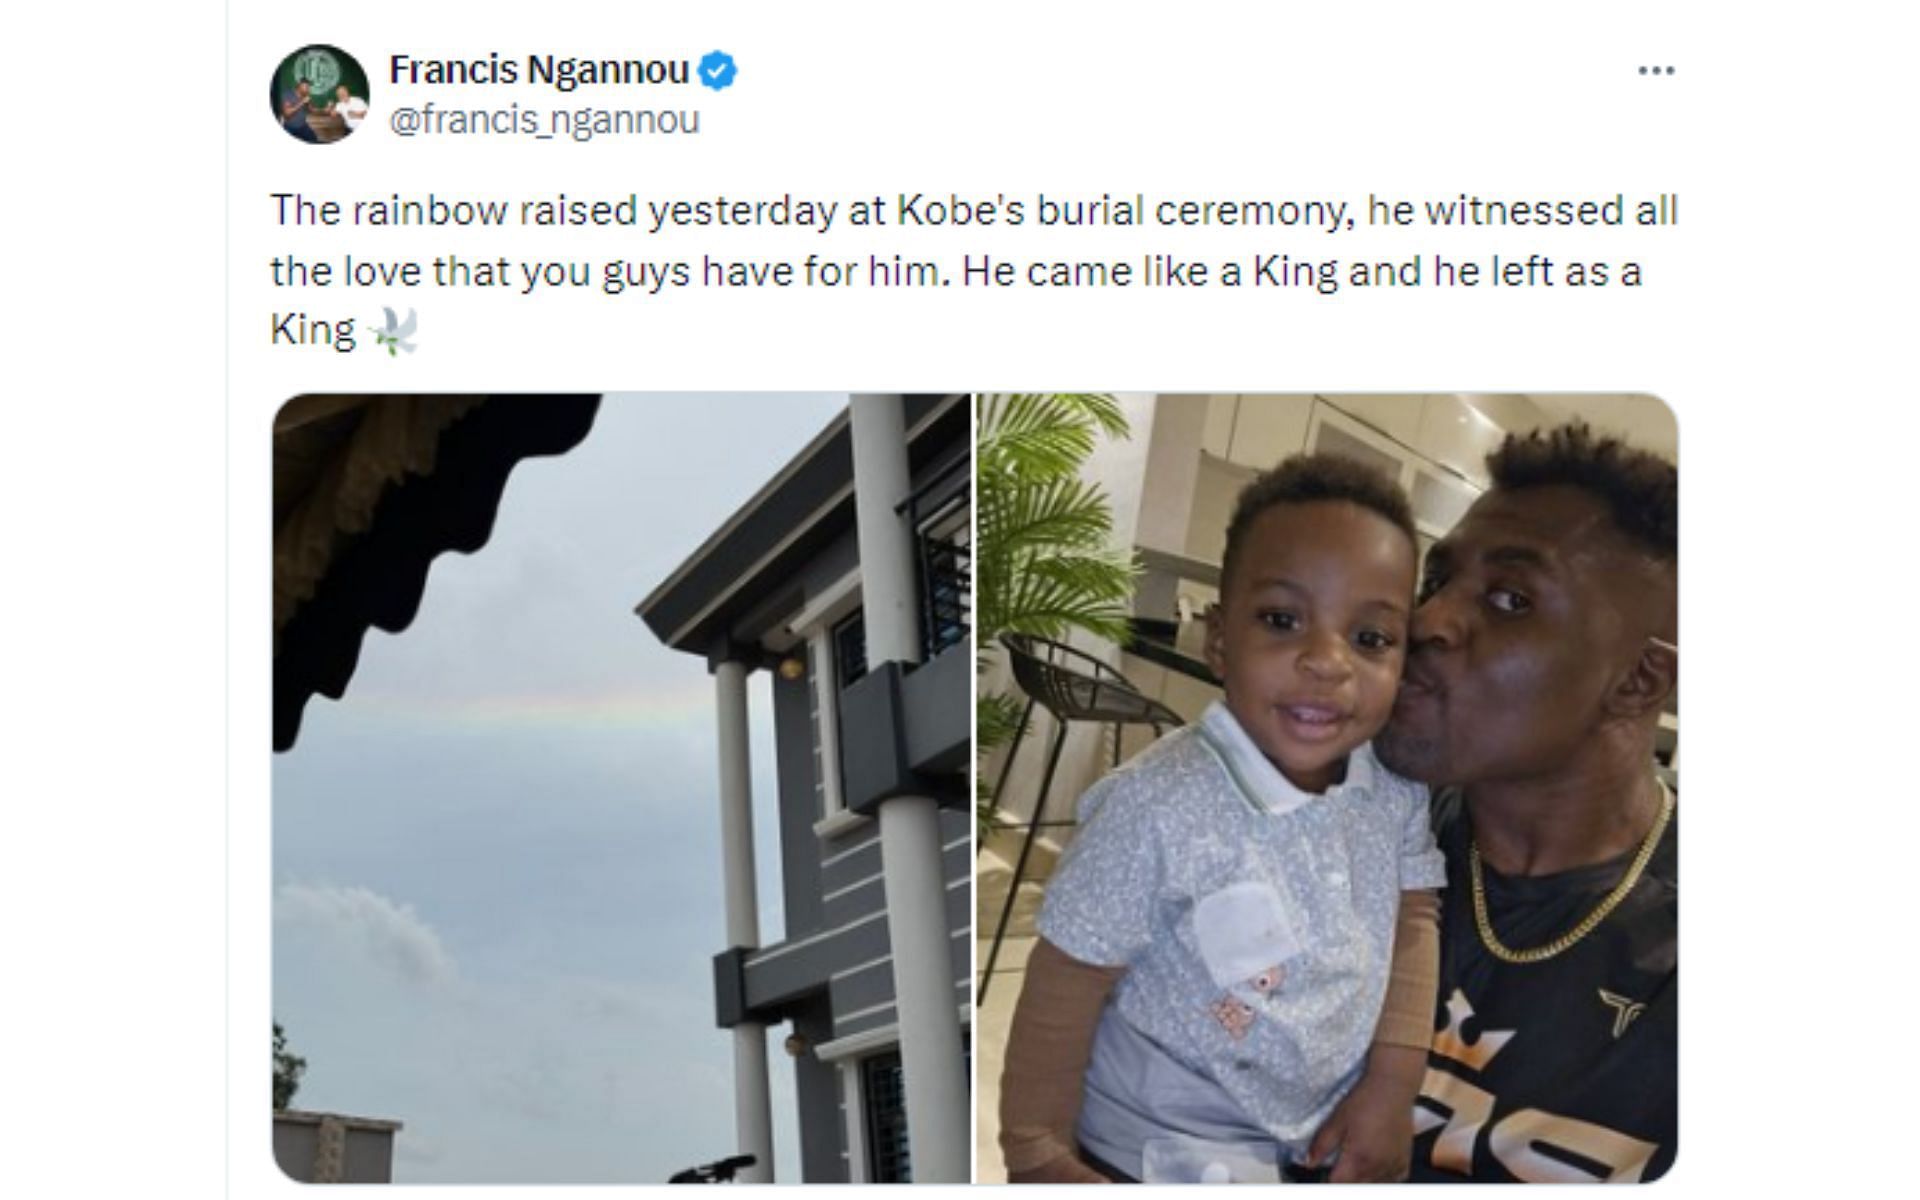 Ngannou&#039;s tweet regarding his son&#039;s burial [Image courtesy: @francis_ngannou - X]